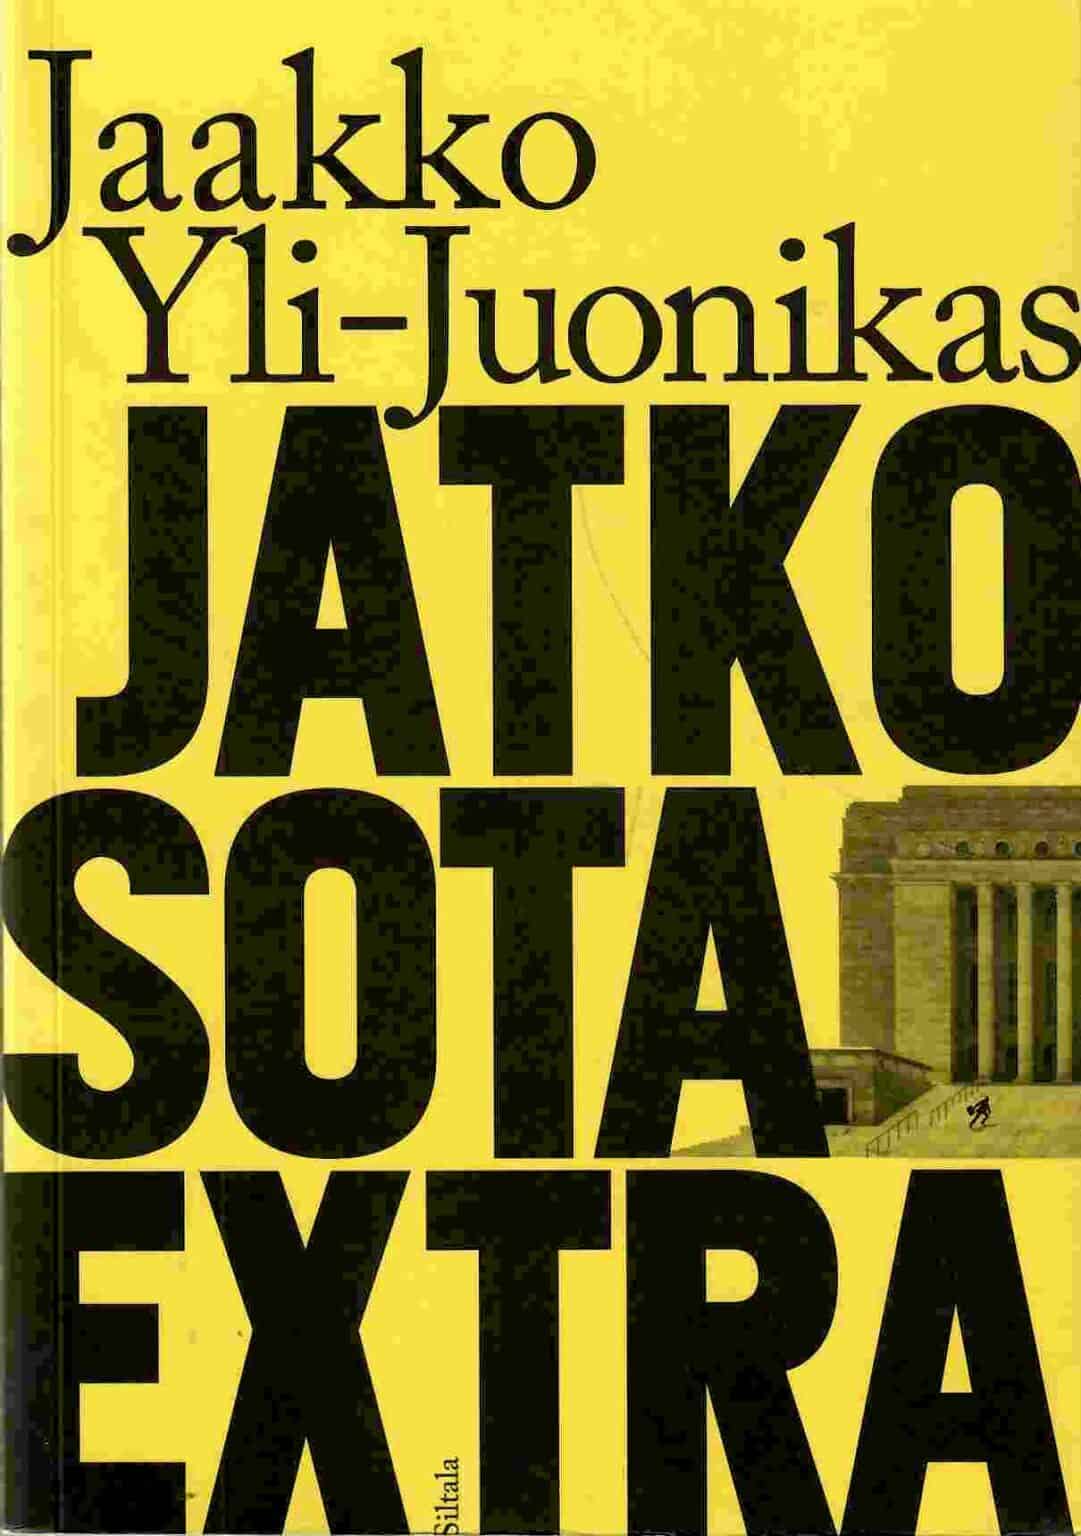 Jaakko Yli-Juonikas: Jatkosota-extra (Finnish language, 2017)